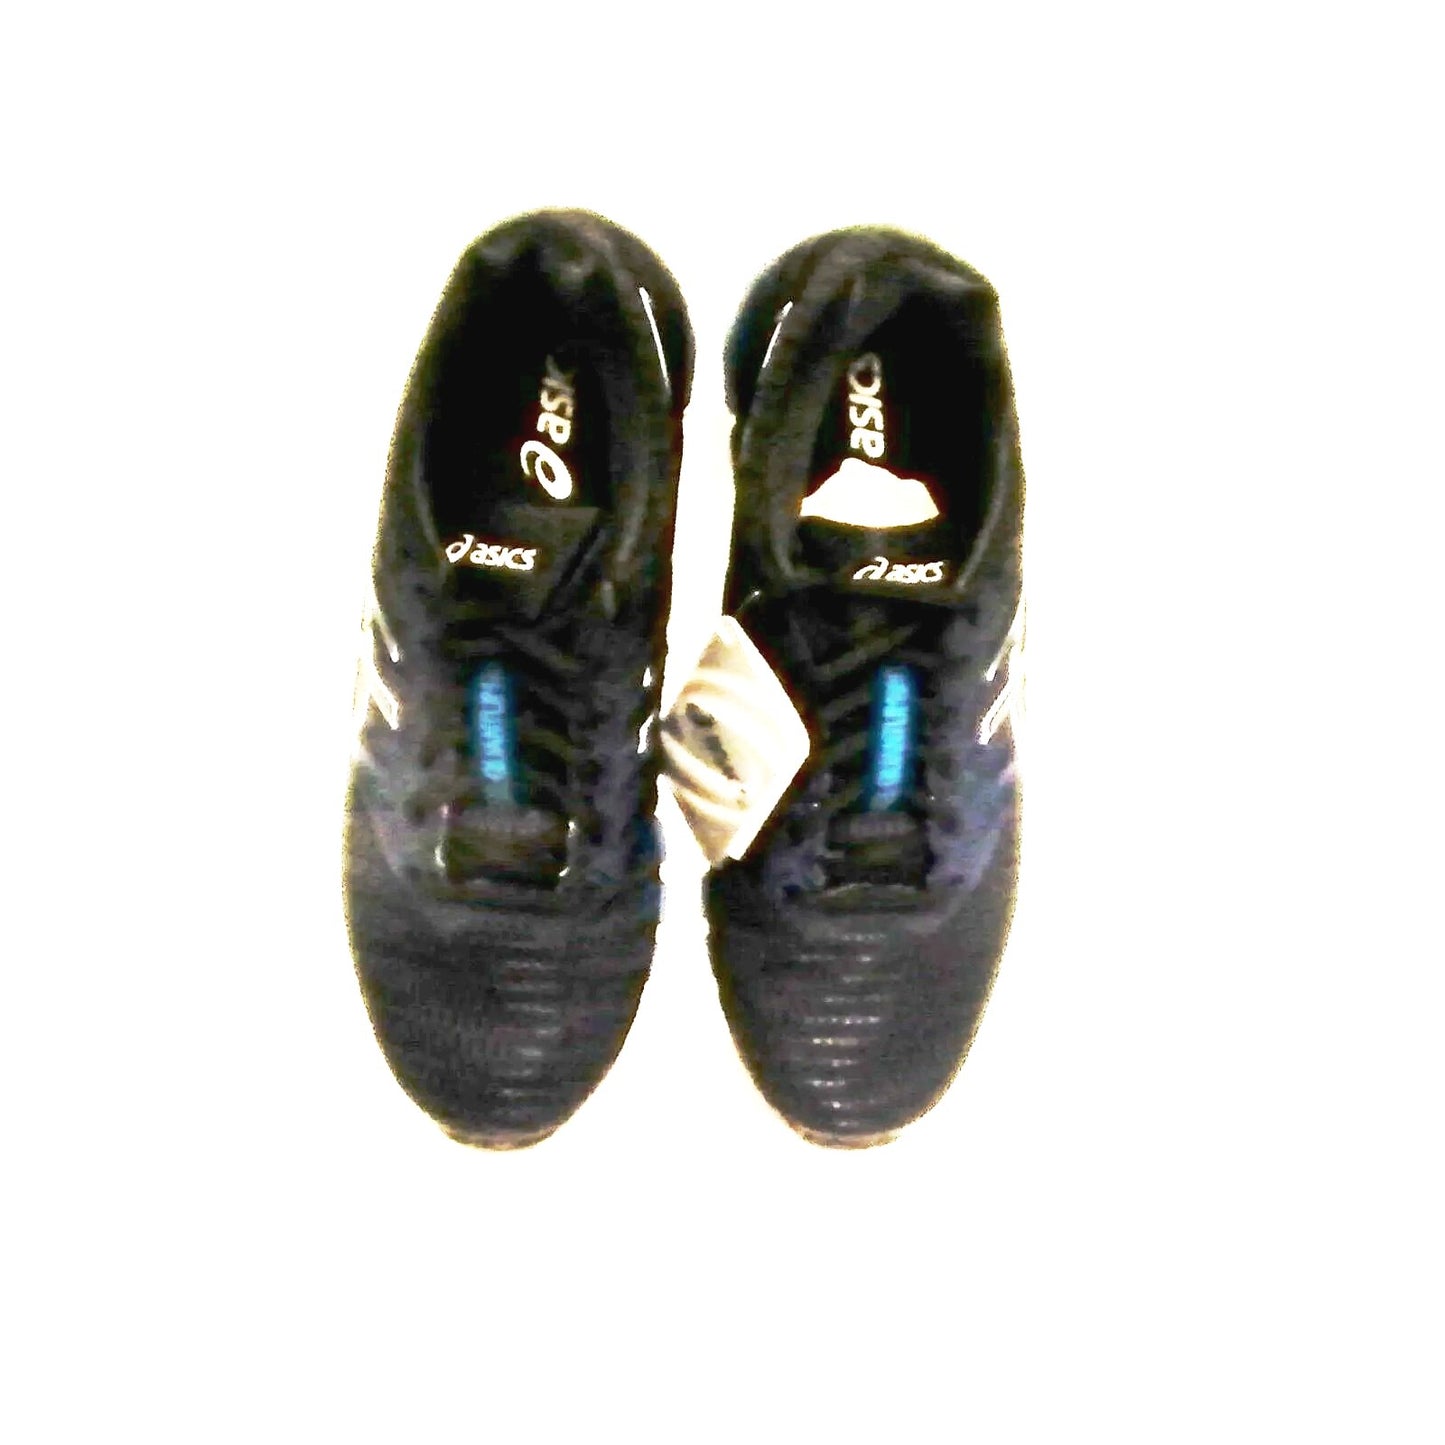 Asics men's gel quantum 180 2 running shoes peacoat black blue size 7.5 us